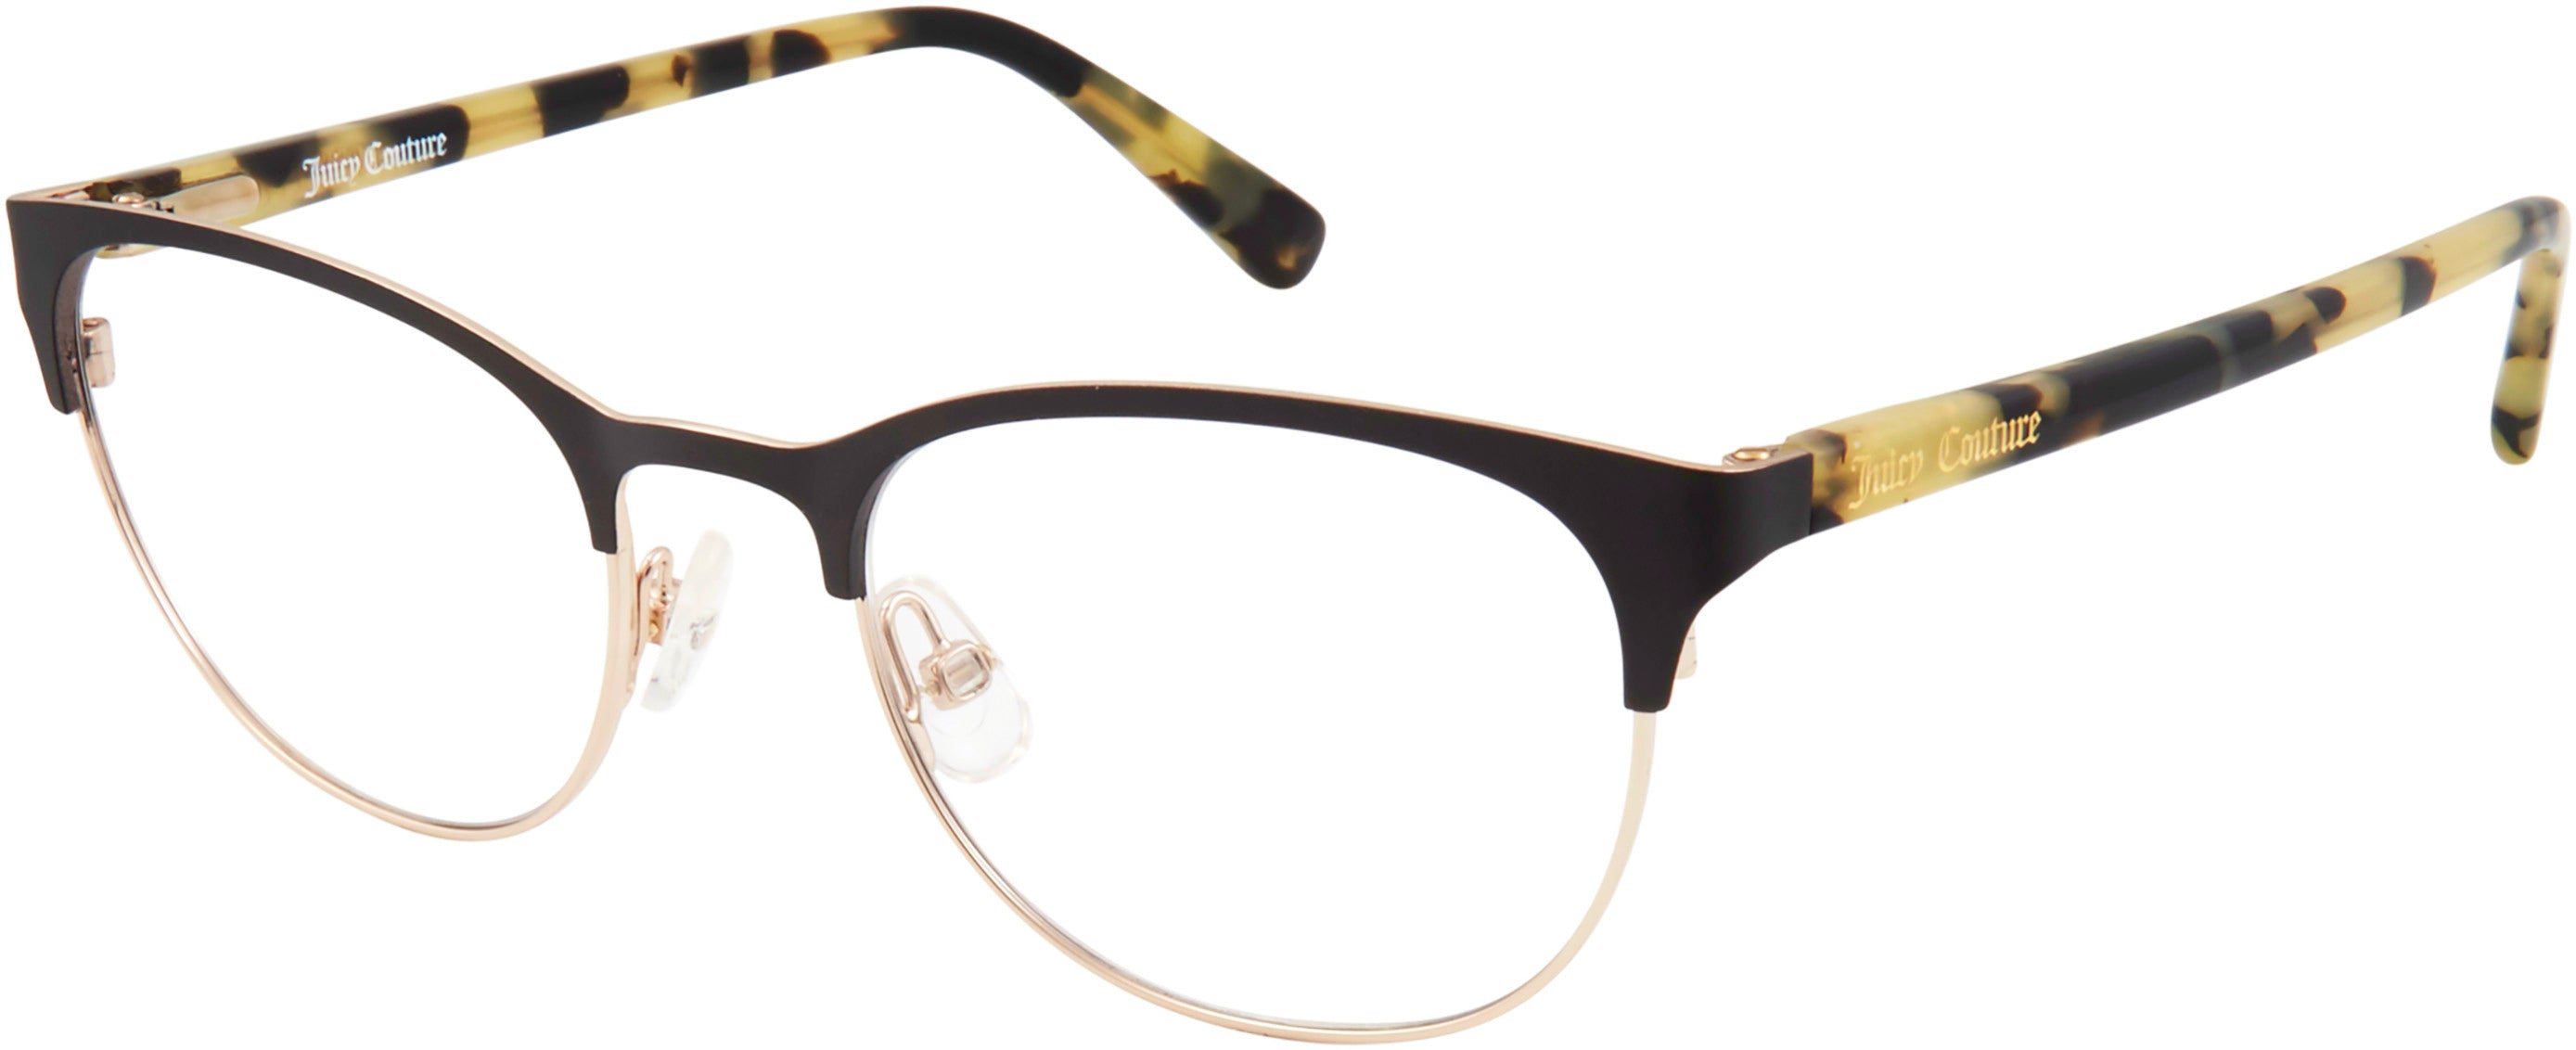 Juicy Couture Juicy 936 Rectangular Eyeglasses 0807-0807  Black (00 Demo Lens)